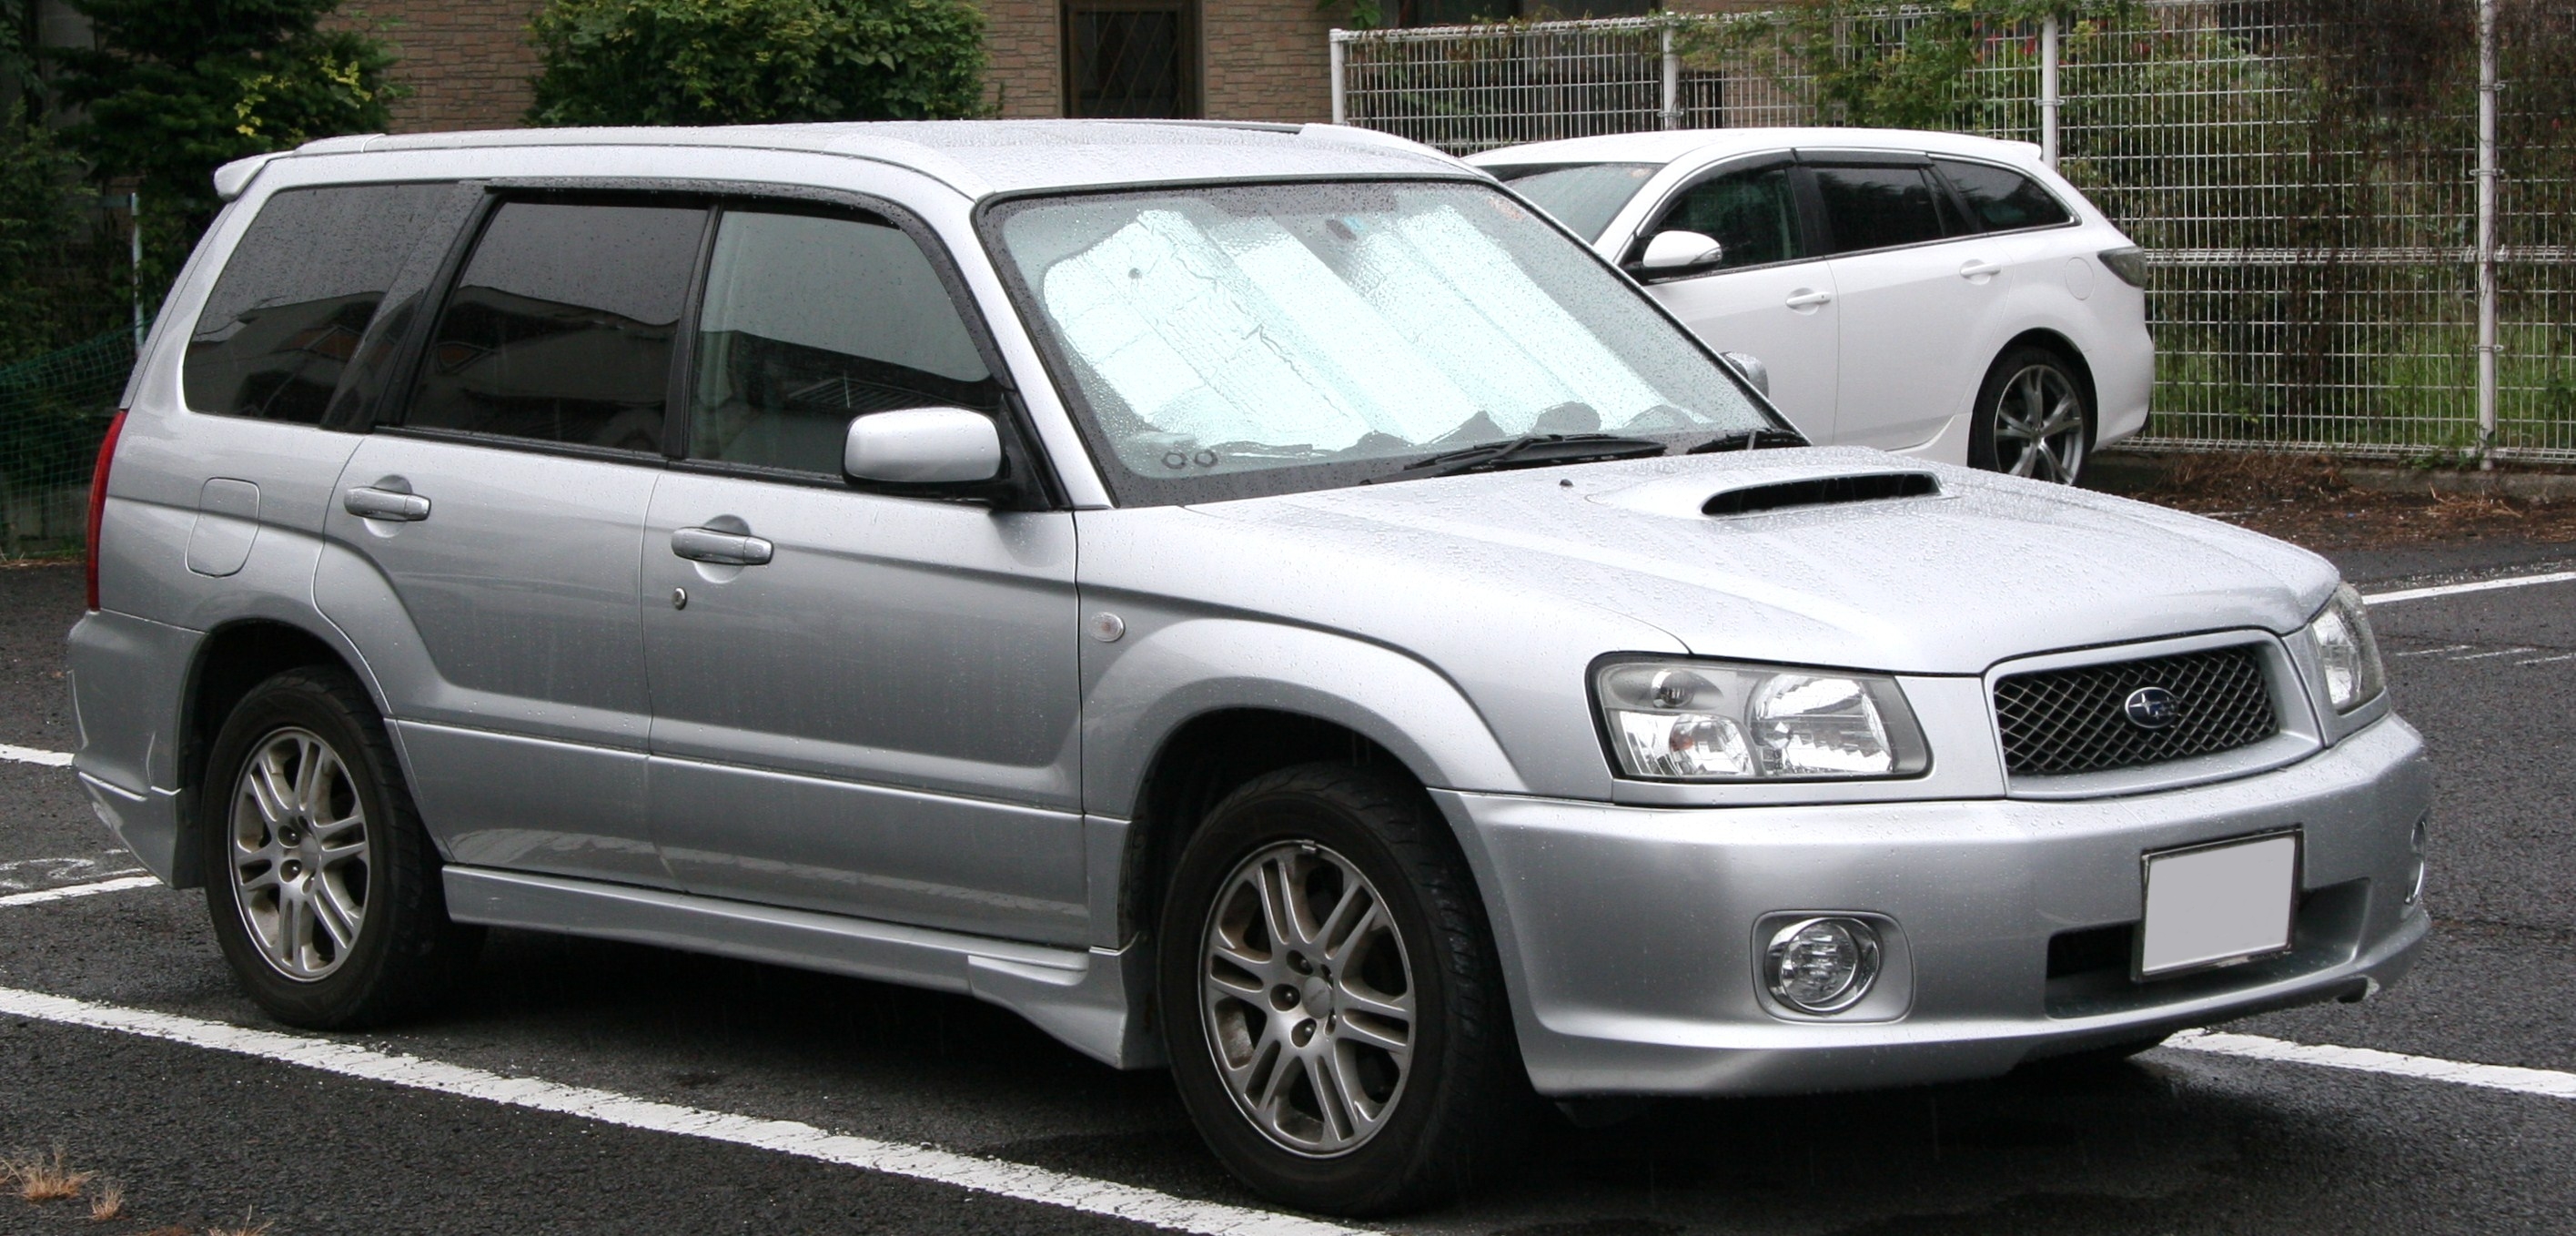 2002 Subaru Forester Information and photos MOMENTcar